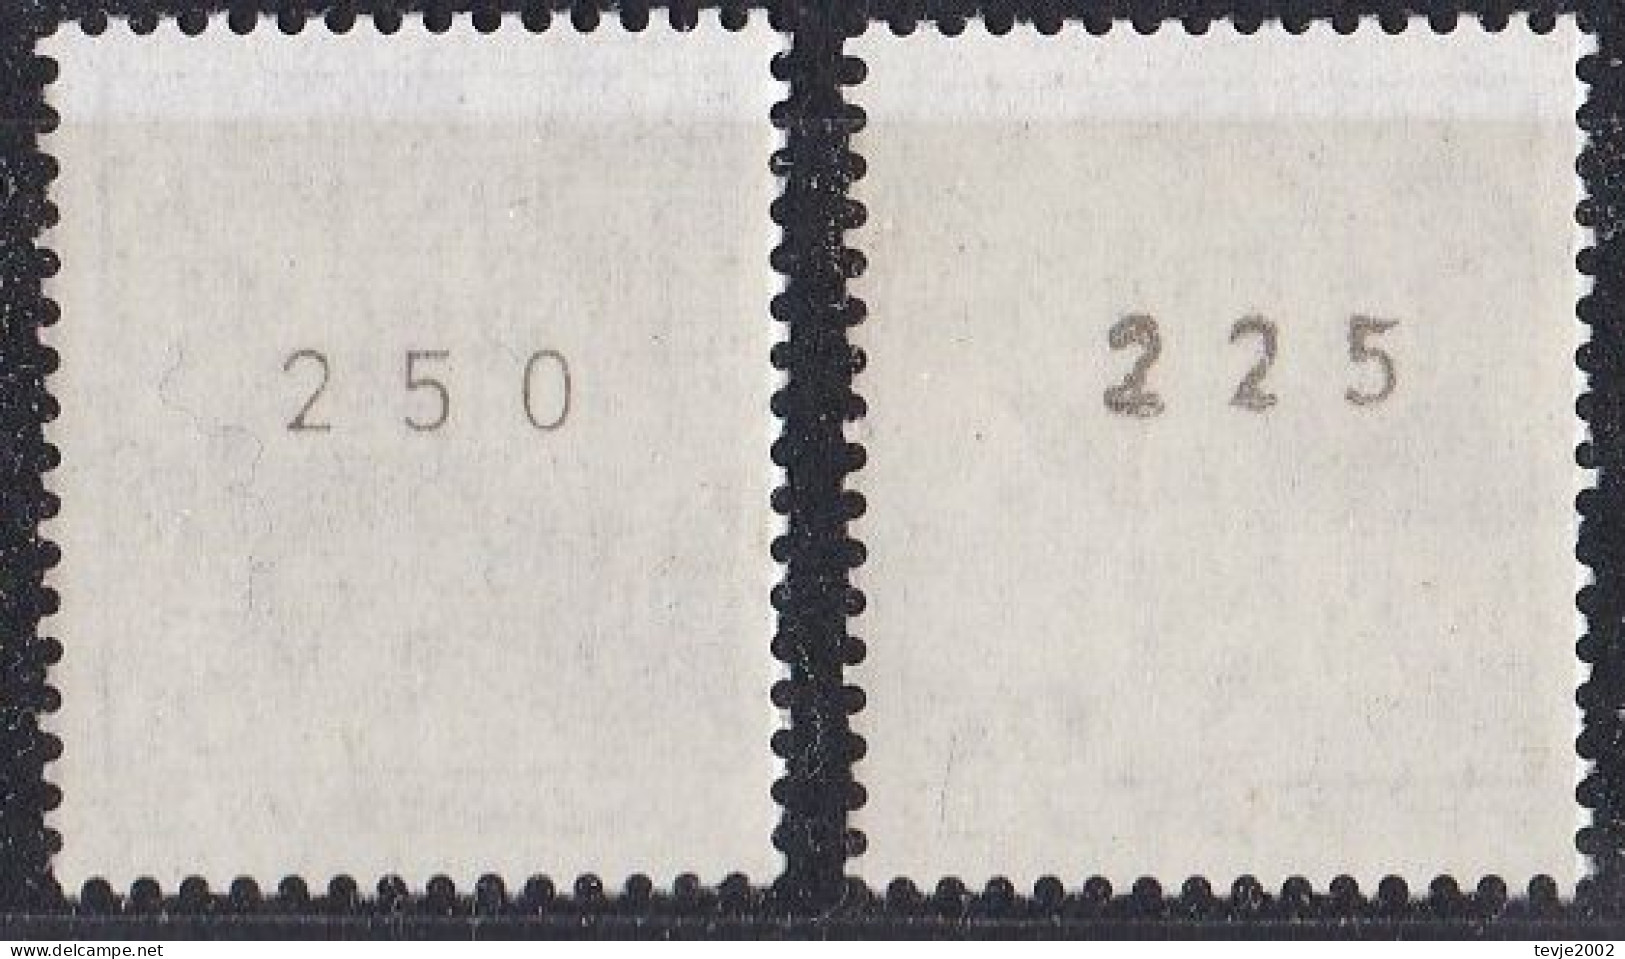 Berlin 1987 - Rollenmarken Mi.Nr. 532 AII + 534 AII - Postfrisch MNH - Letterset Mit Nummern - Rolstempels